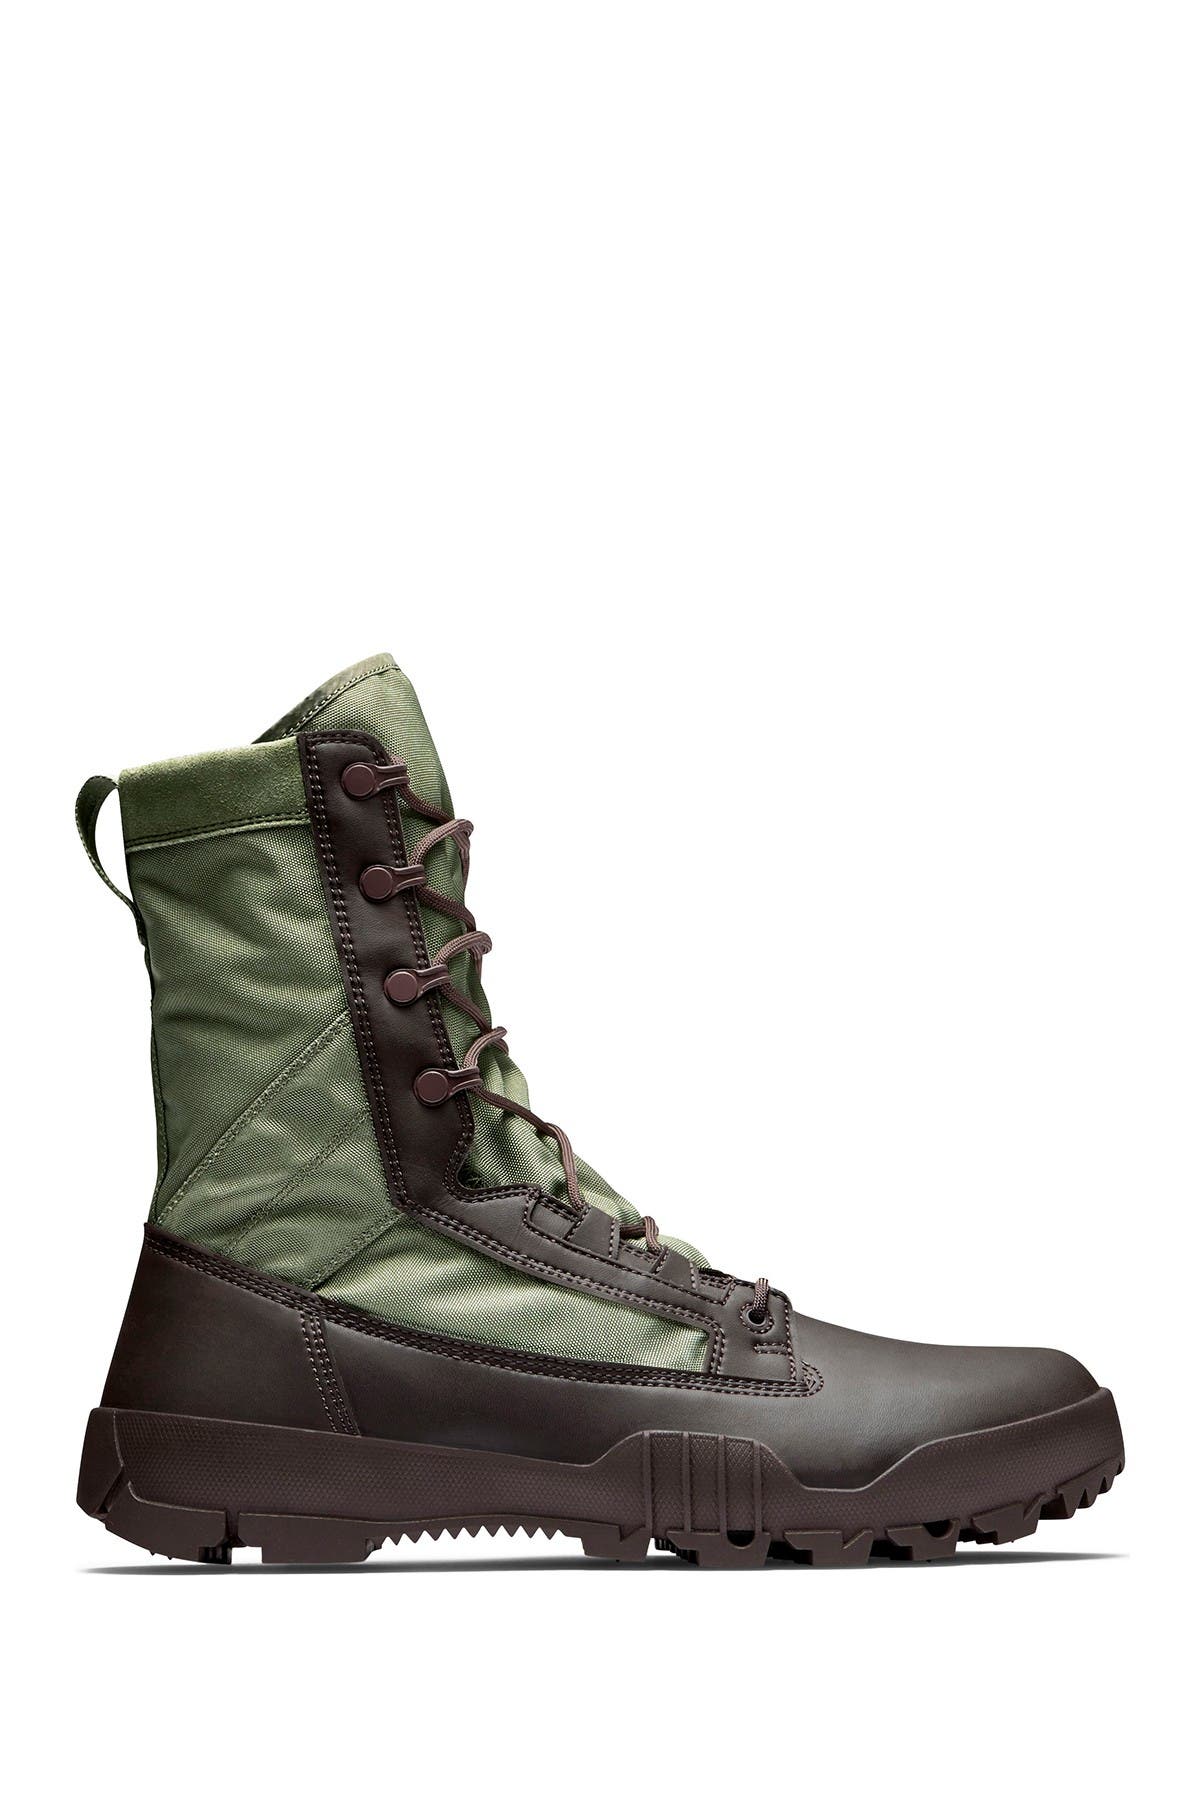 Nike | SFB Jungle Tactical Boot 